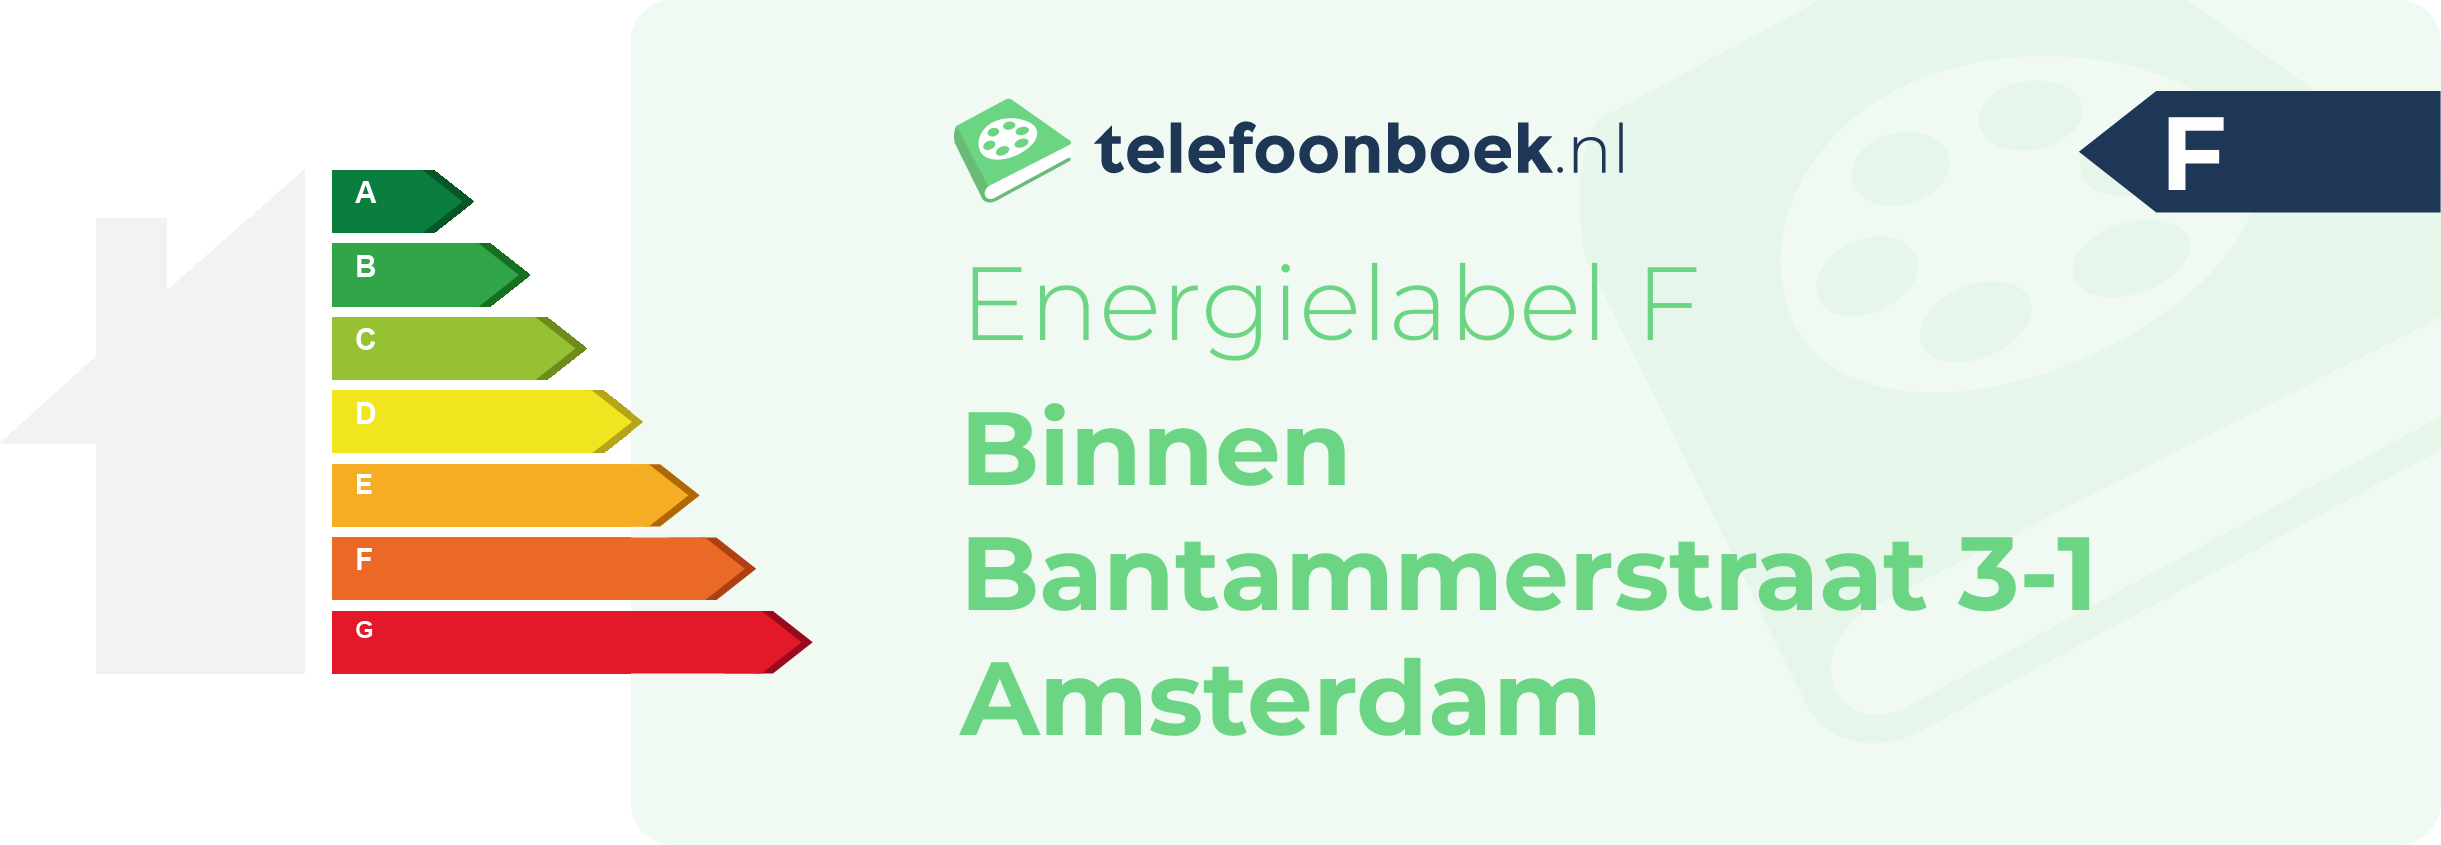 Energielabel Binnen Bantammerstraat 3-1 Amsterdam